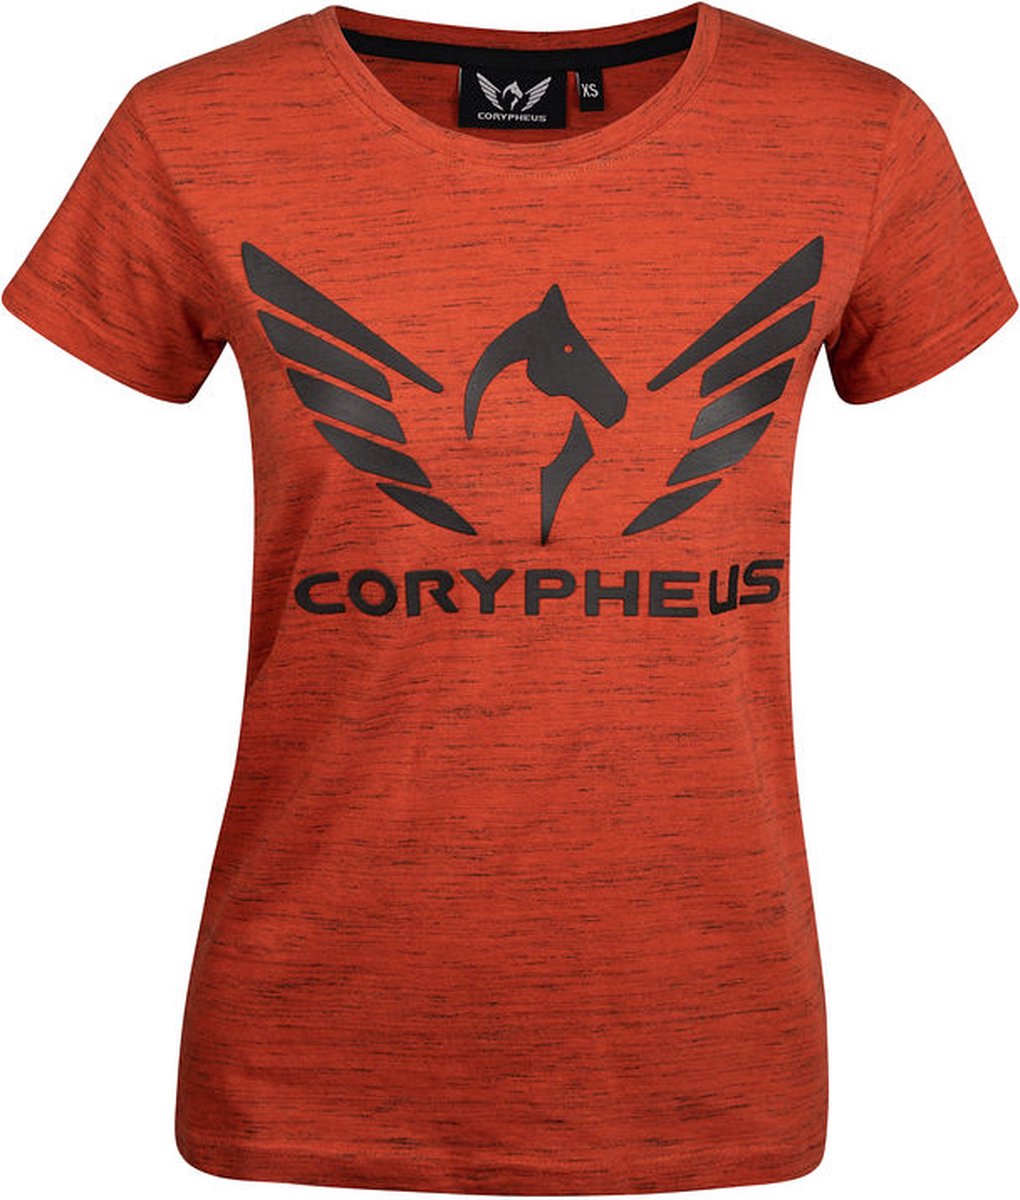 Corypheus Burnt Henna Women's T-Shirt - Small